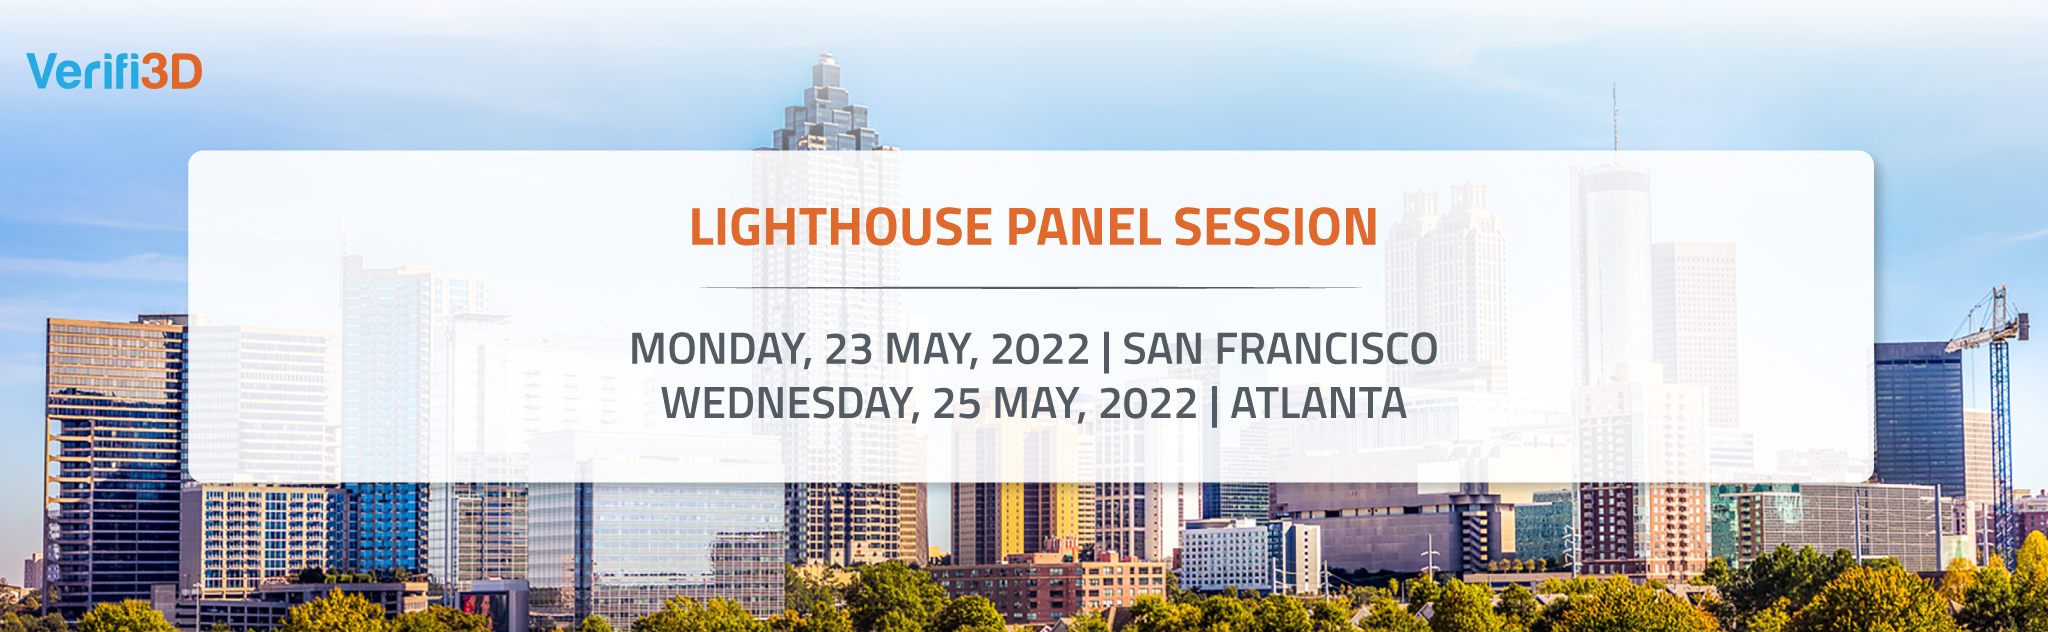 Lighthouse Panel Session - San Francisco and Atlanta